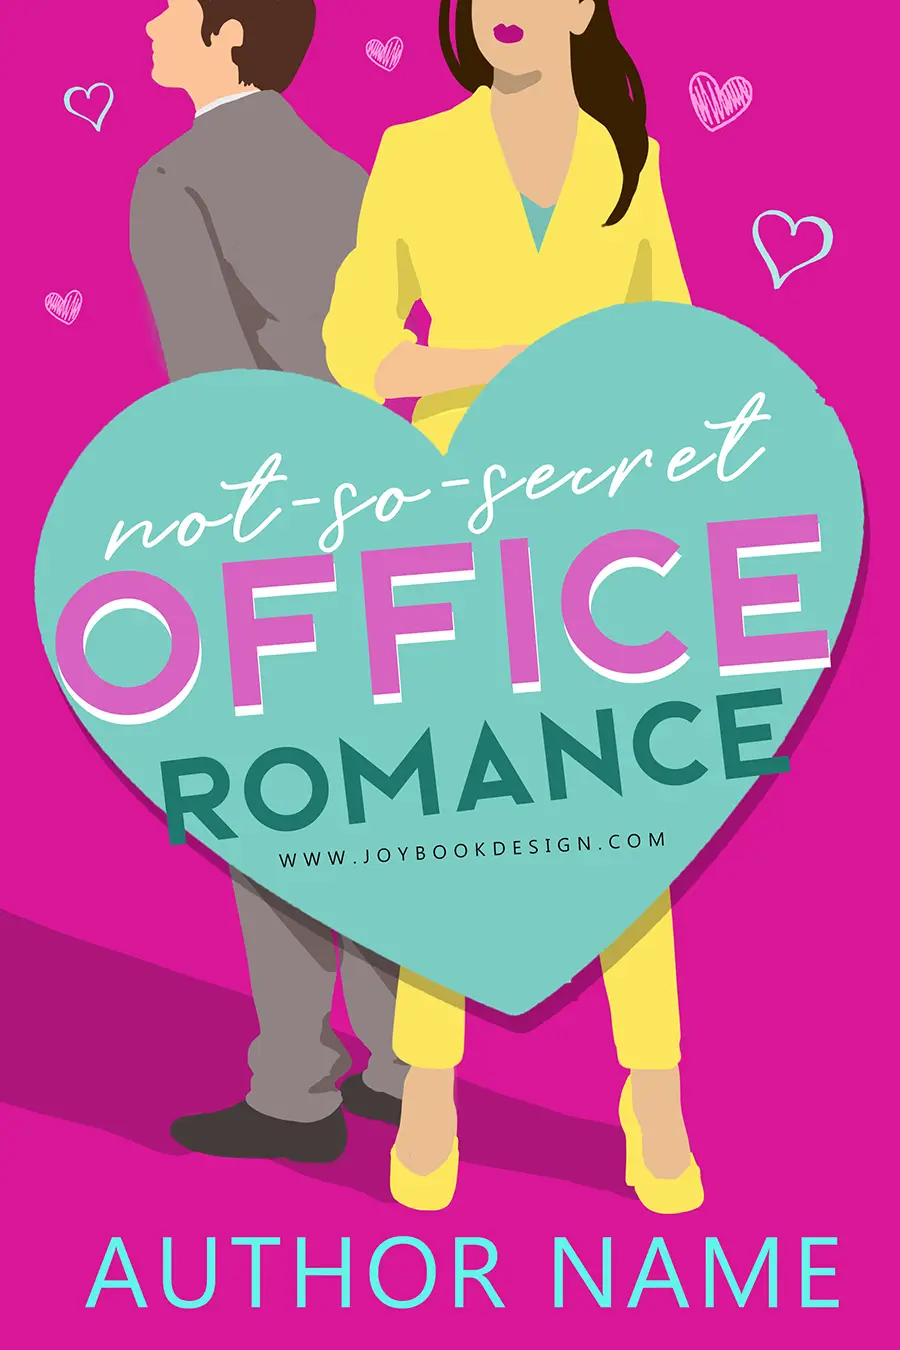 Not-So-Secret Office Romance